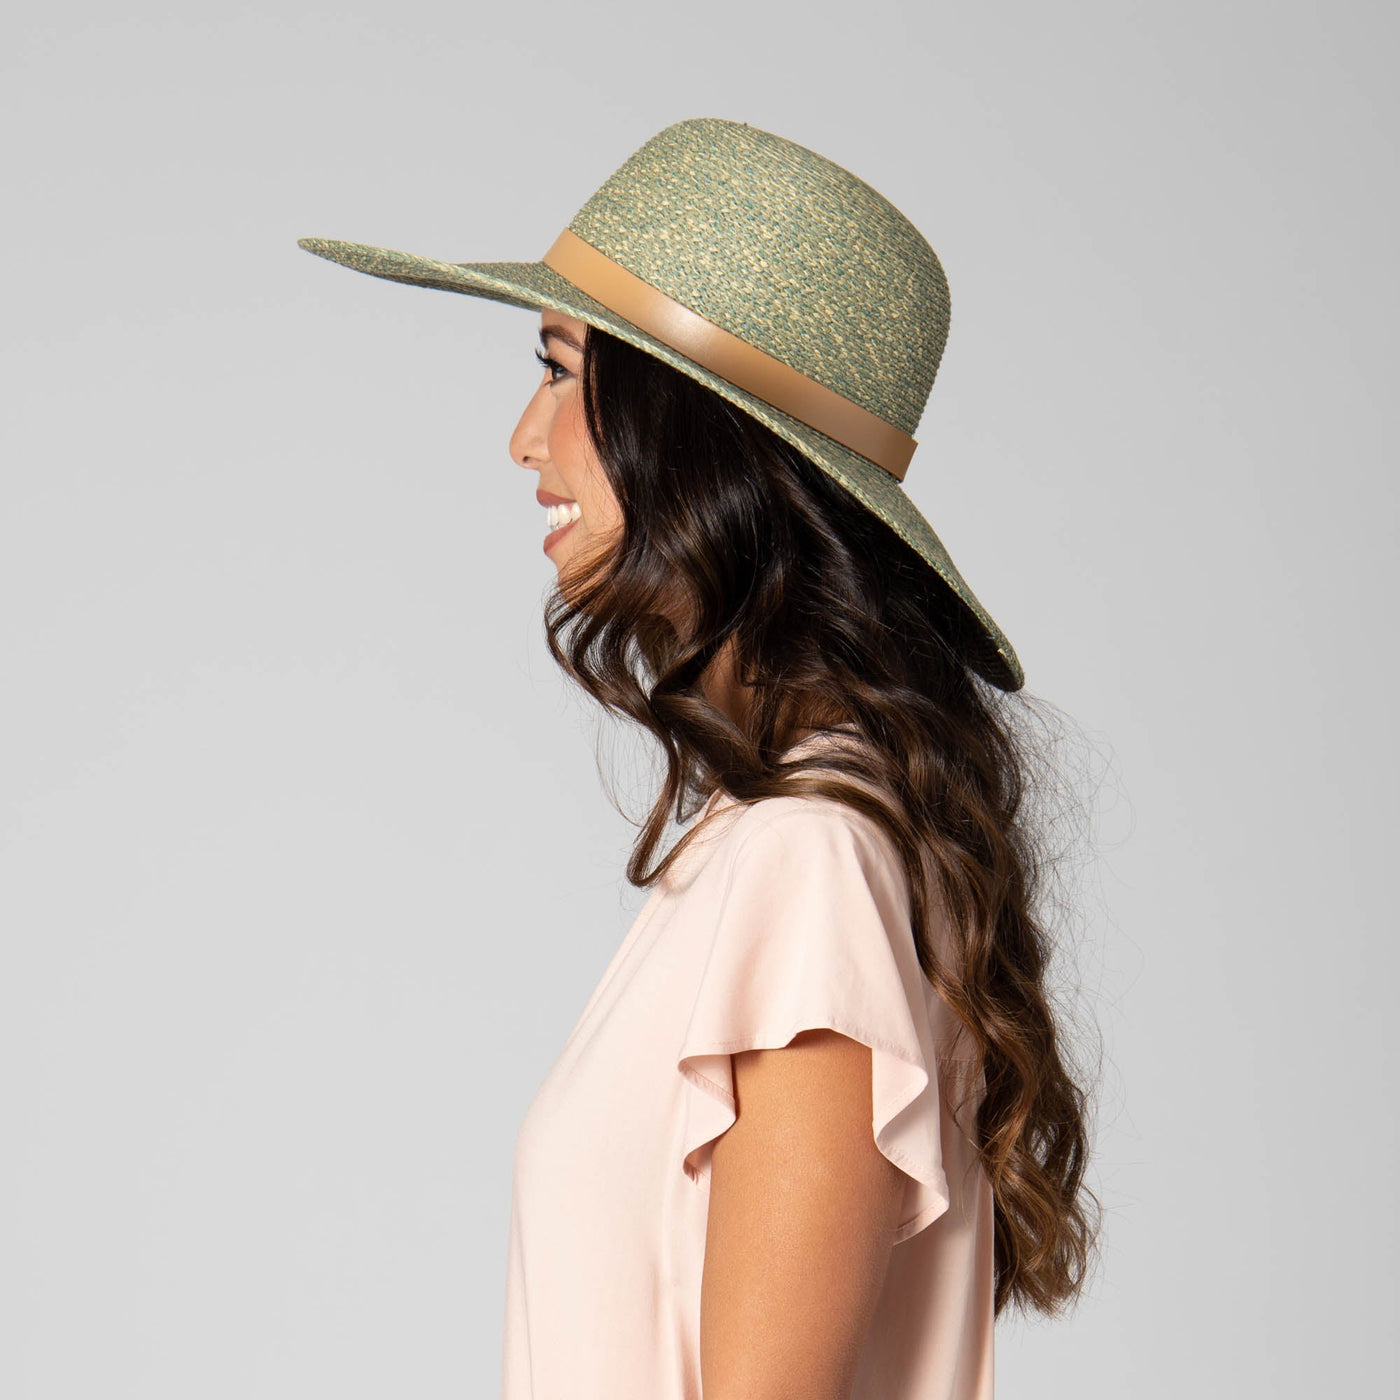 SUN BRIM - Sun Lounger - Women's Paperbraid Round Crown Sun Hat